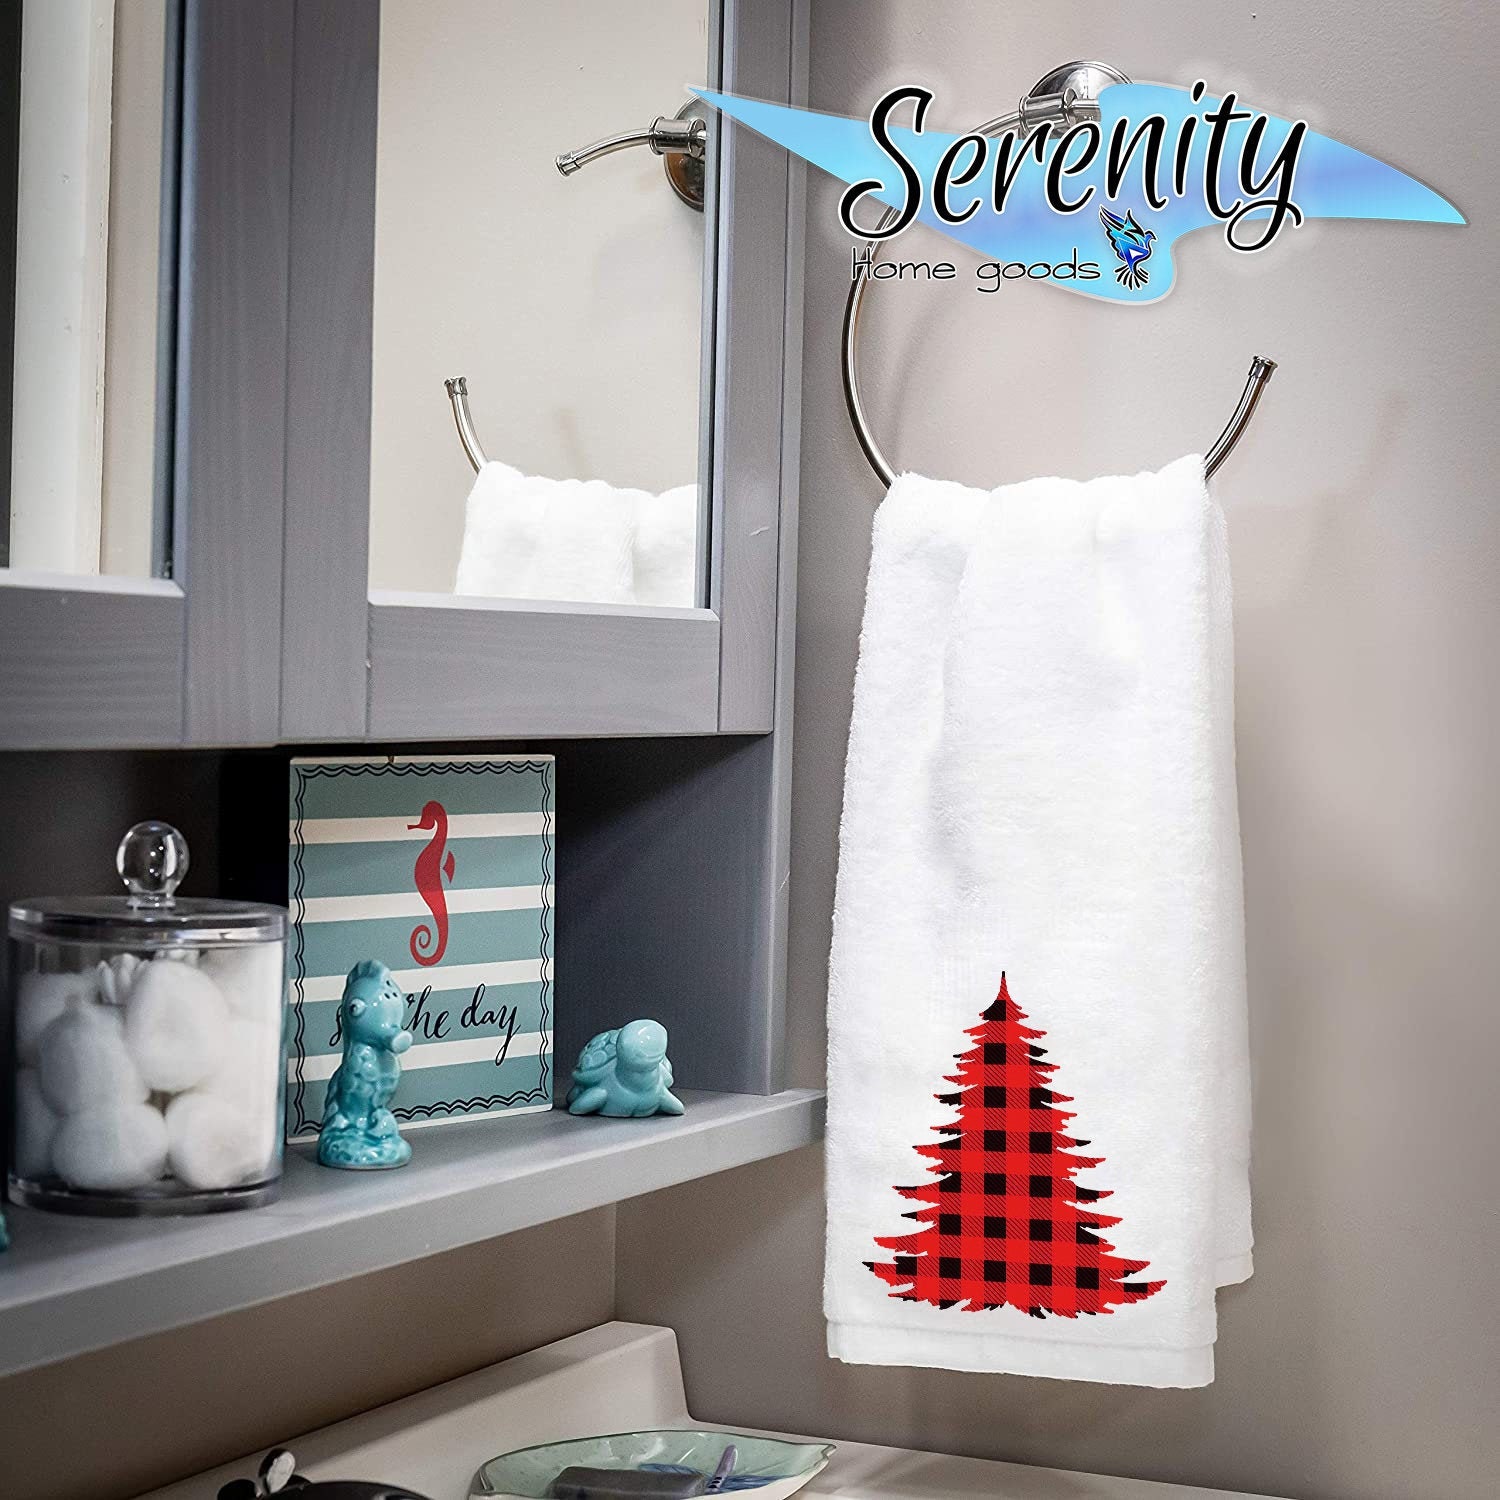 Black White Buffalo Plaid Snowman Xmas Trees Christmas Kitchen Towels Dish  Towel